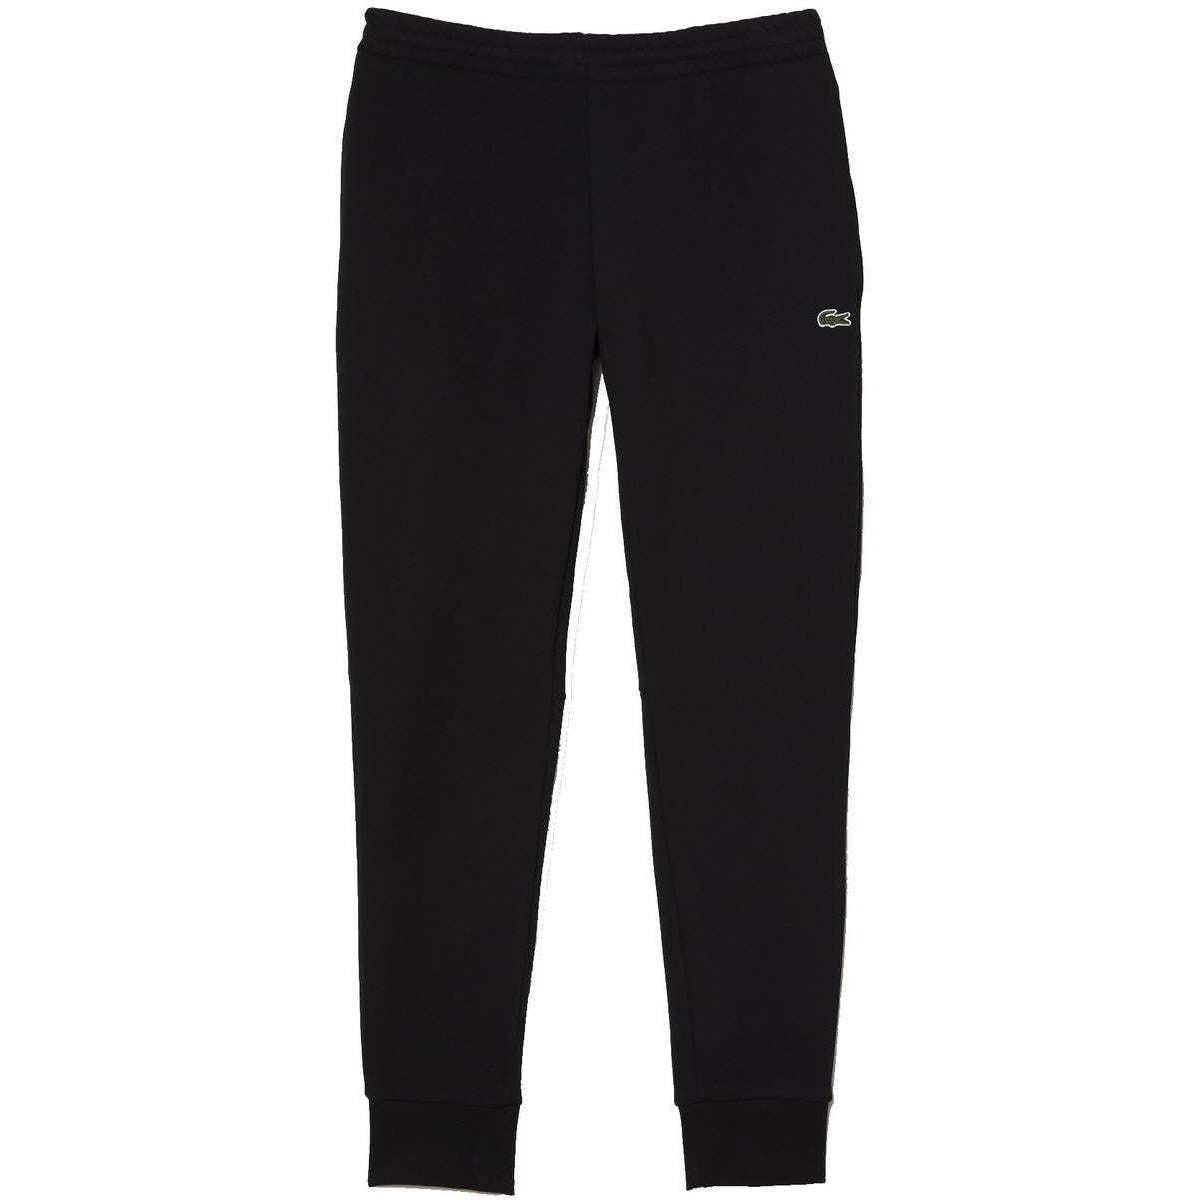 Lacoste Slim Fit Organic Cotton Fleece Jogging Bottoms - Black